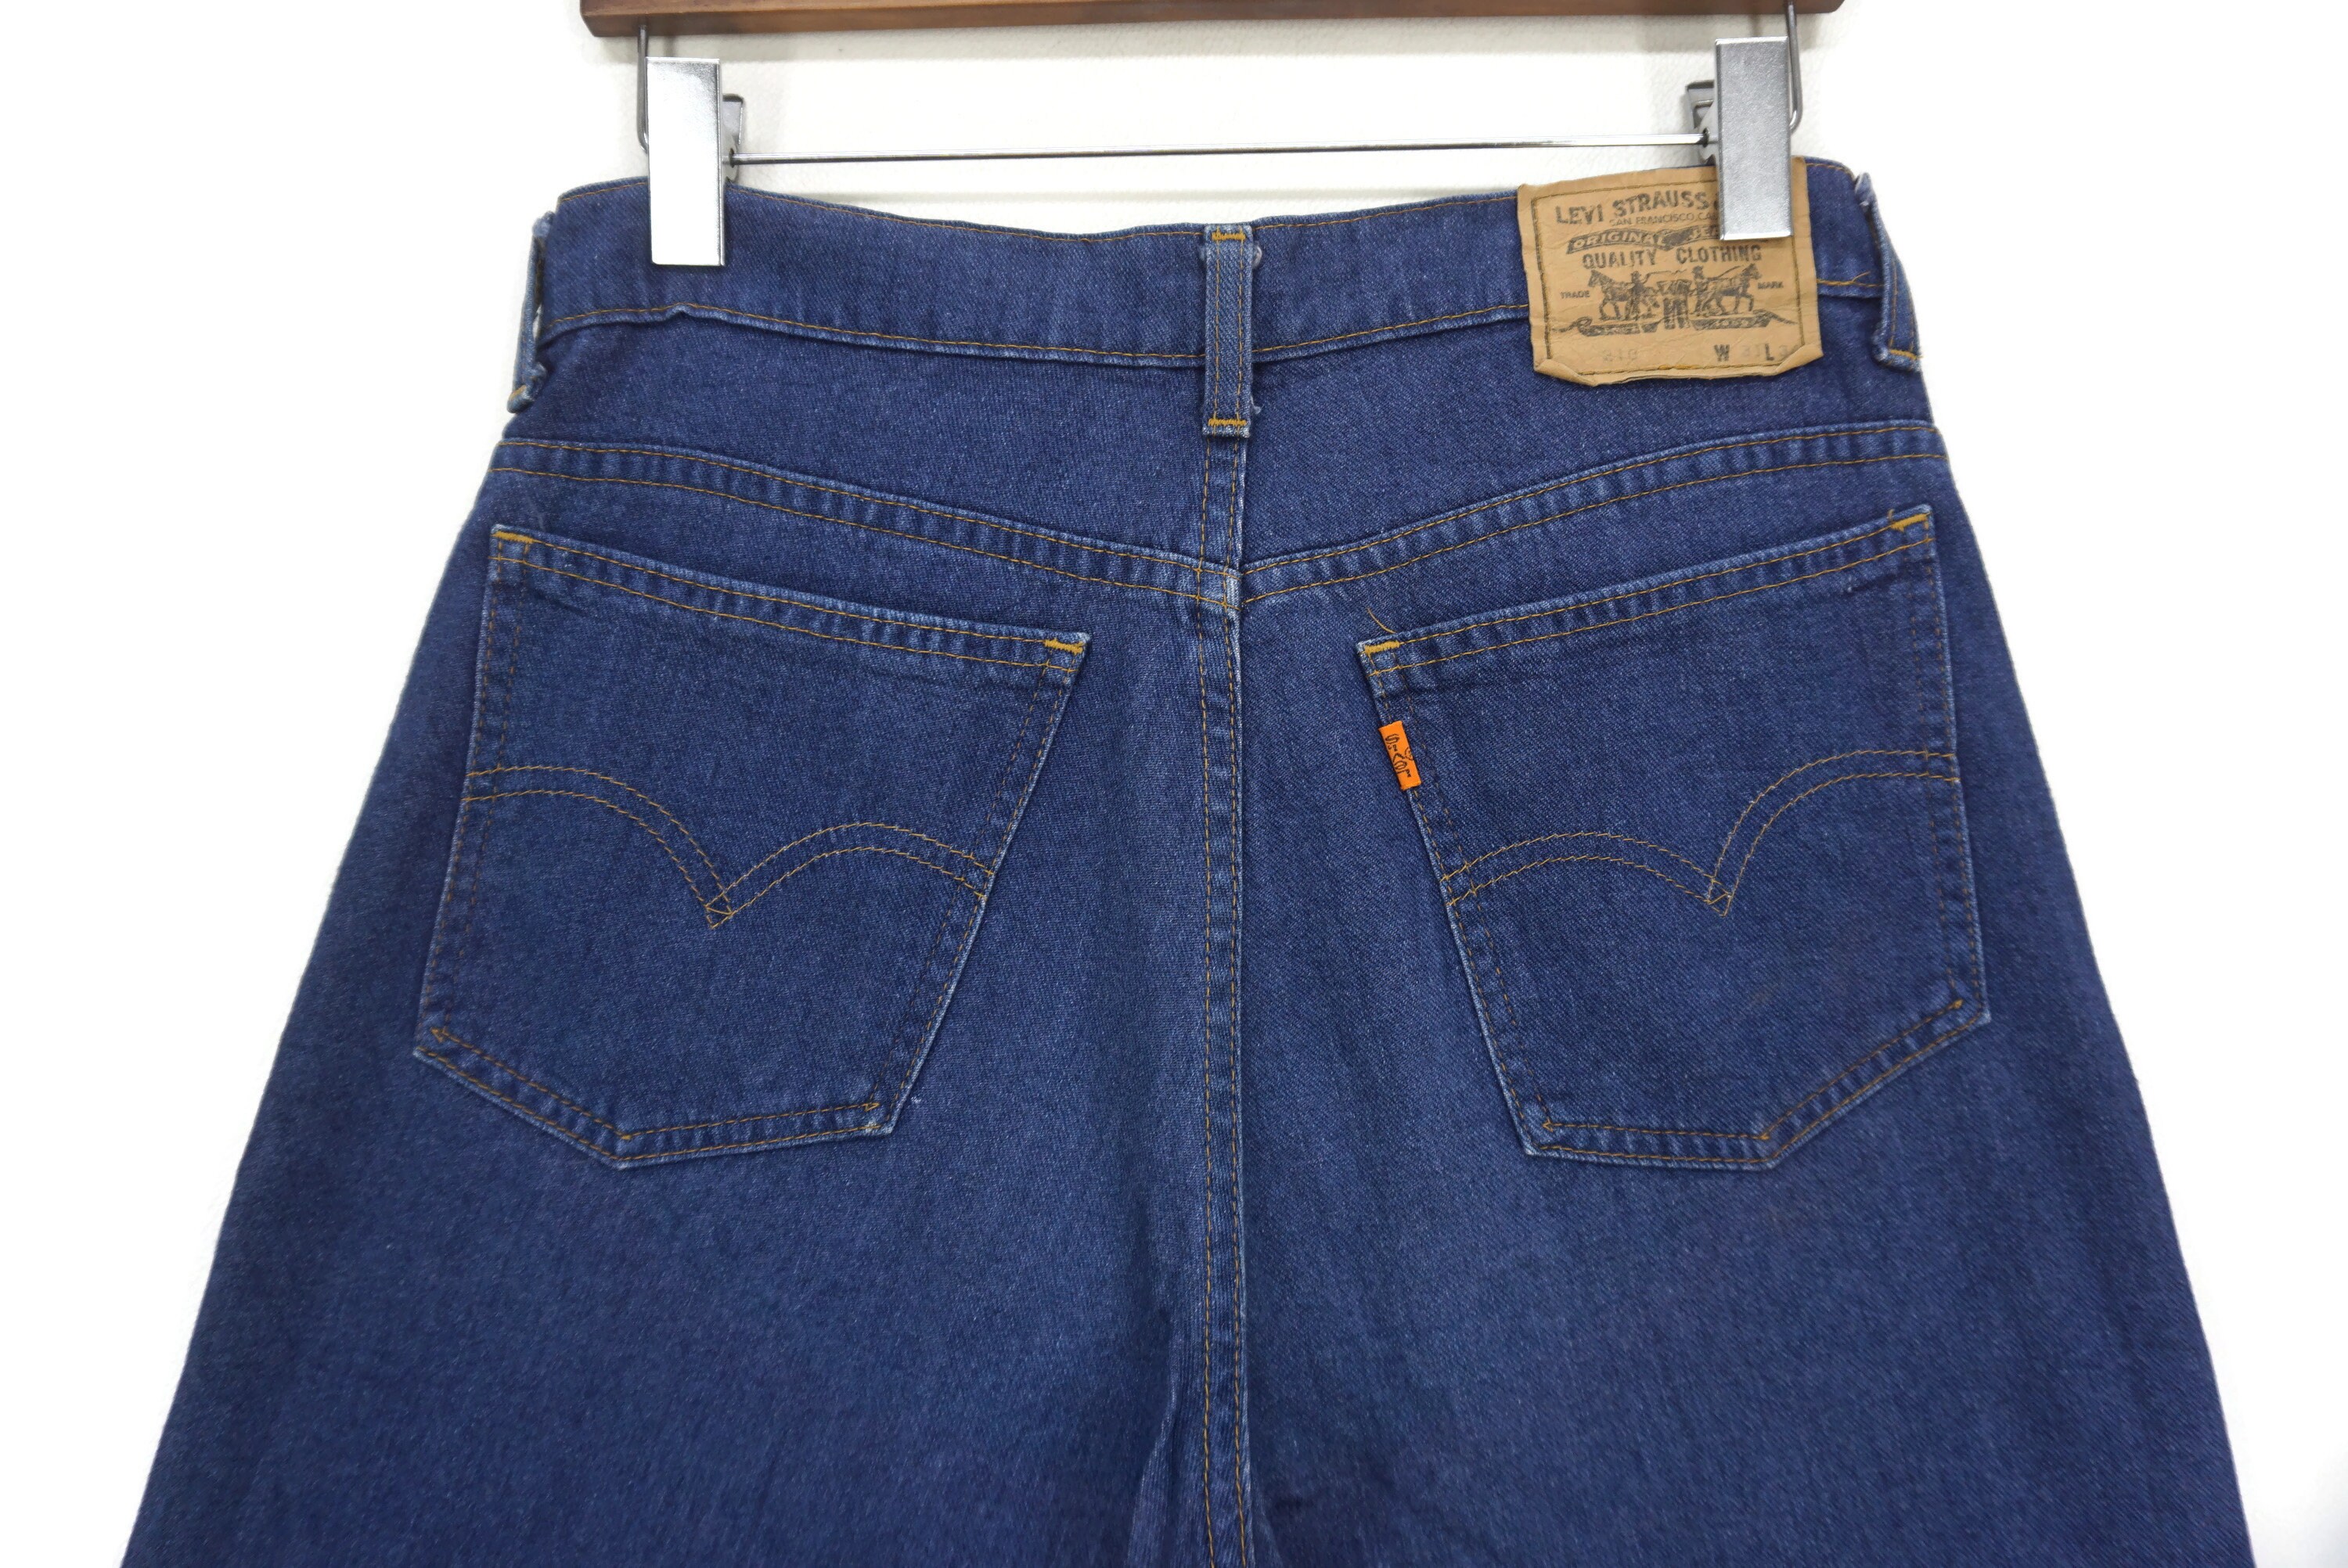 Levis 210 Orange Tab Jeans Size 31 W31xl30 90s Levis 210-50 Denim